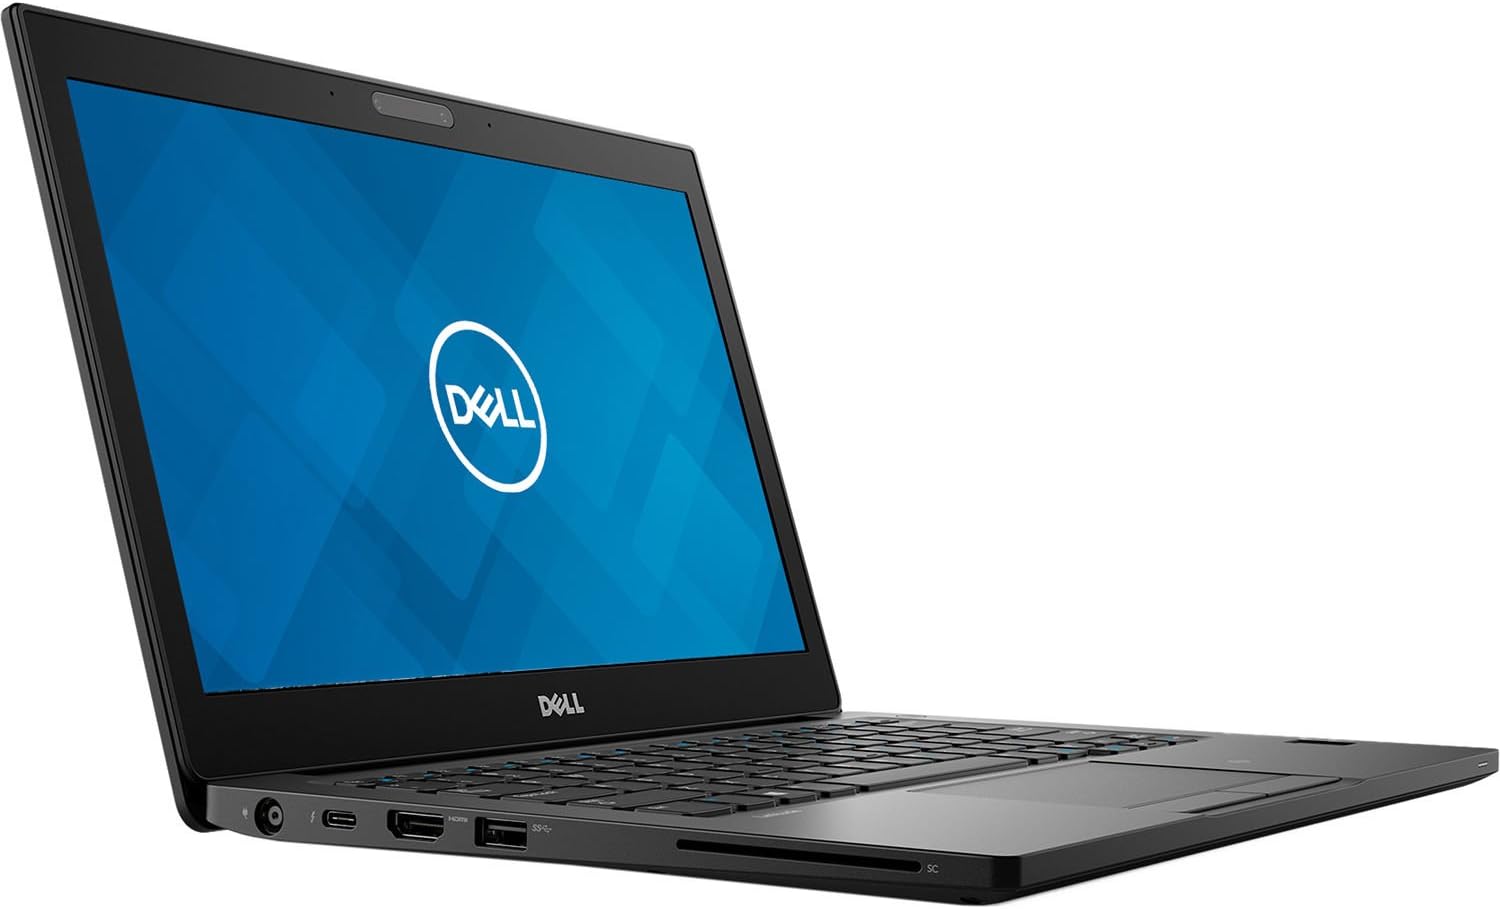 Dell Latitude 7290 Laptop 12.5 - Intel Core i5 7th Gen - i5-7300U - Dual Core 3.5Ghz - 256GB SSD - 8GB RAM - 1366x768 HD - Windows 10 Pro (Renewed)